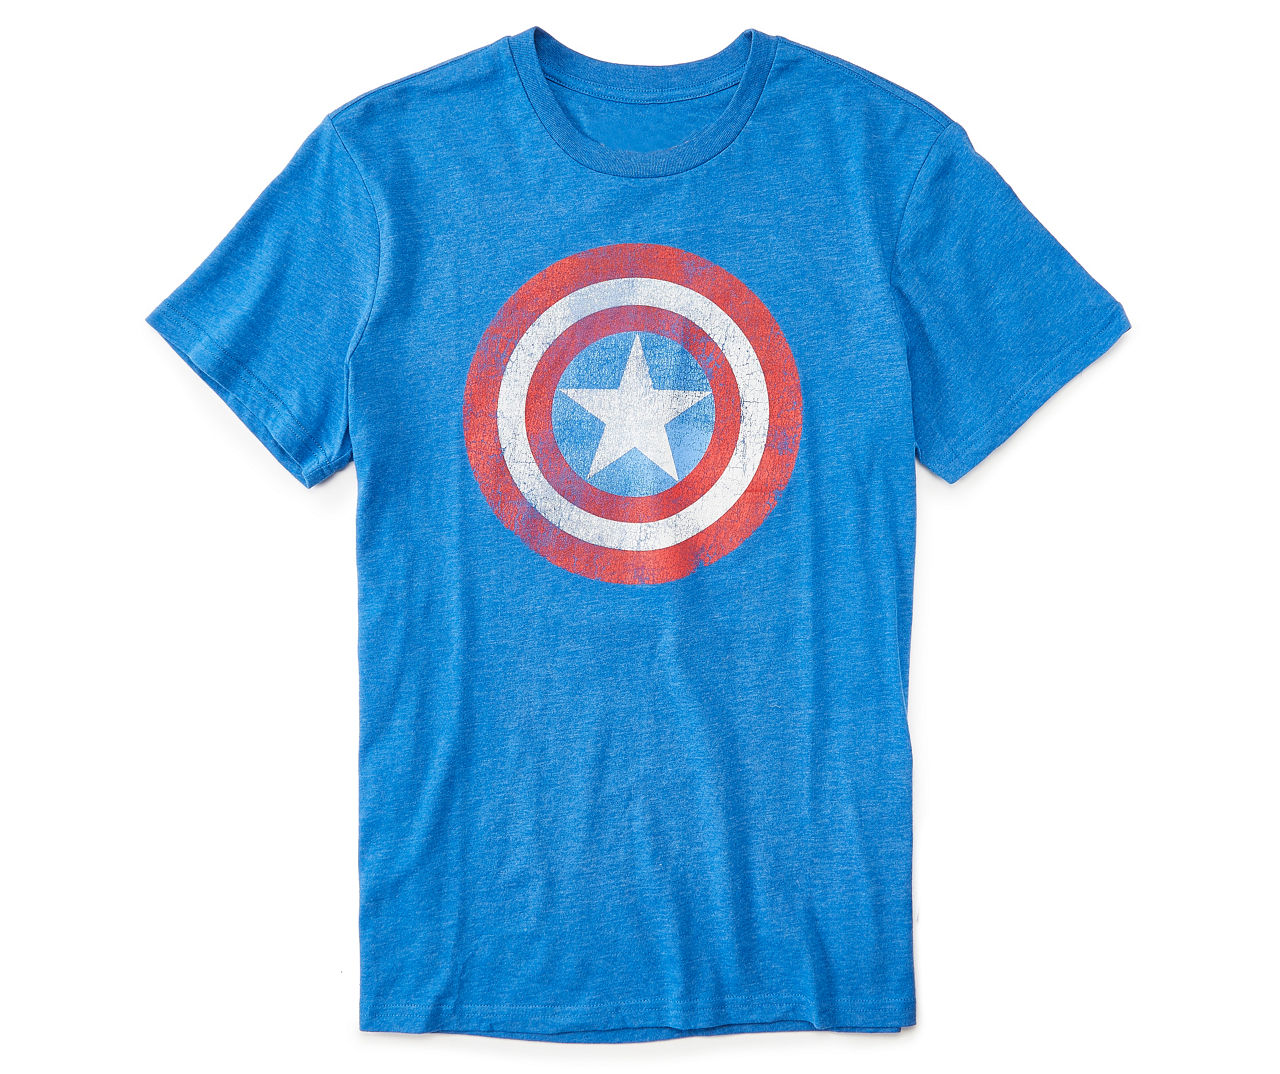 Men's Captain America Shield Graphic Tee